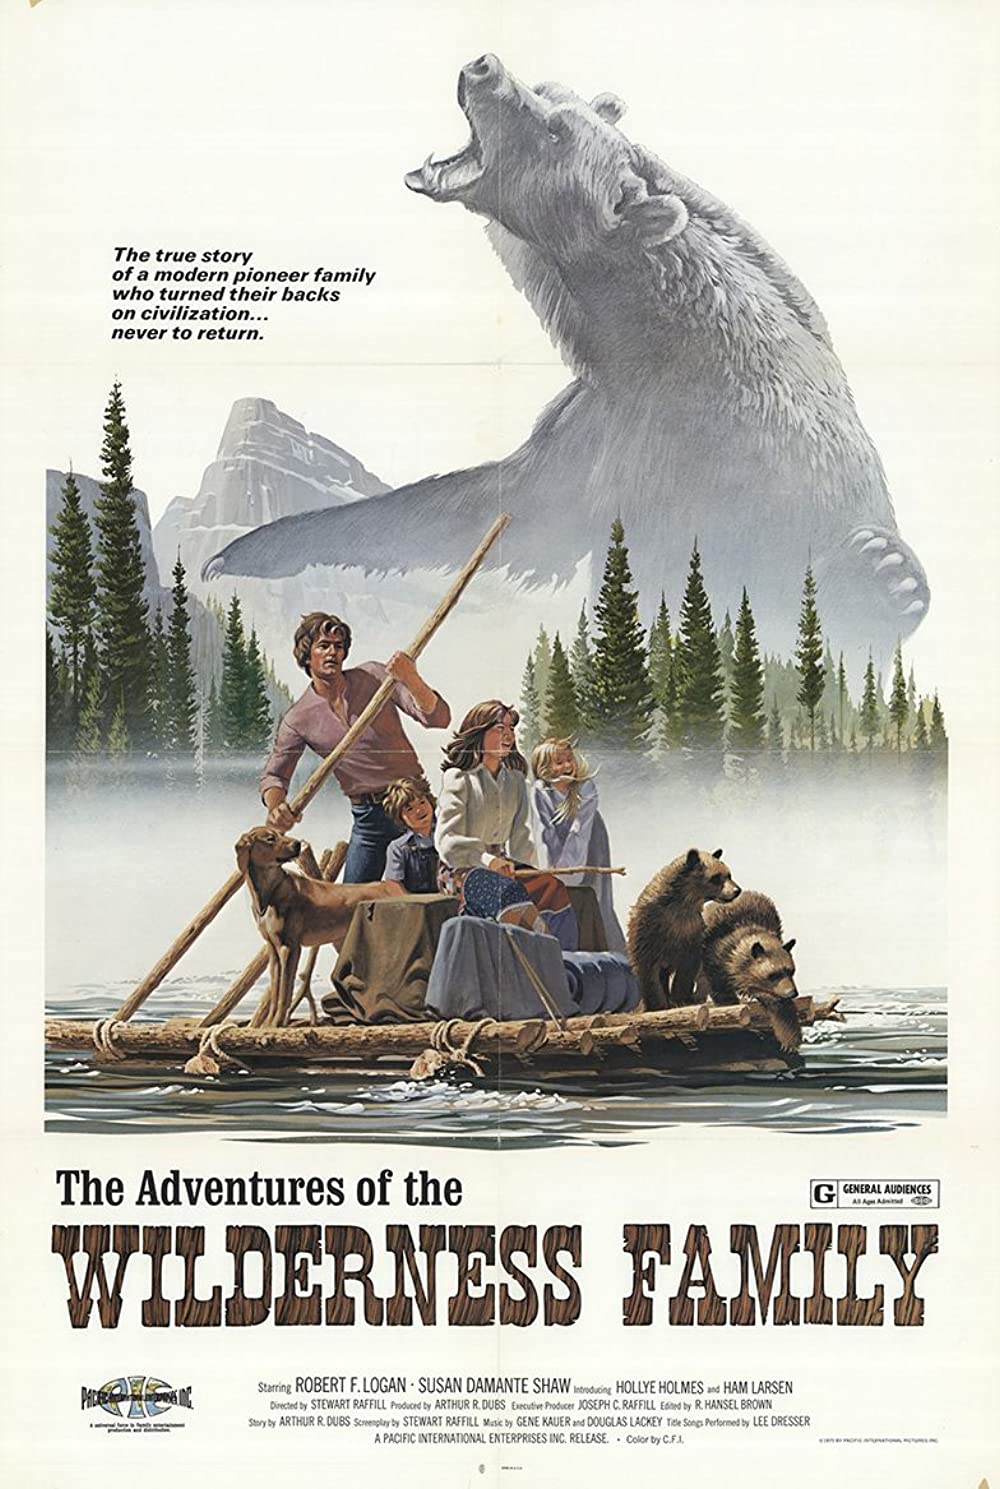 The Adventures of the Wilderness Family (1975) บ้านเล็กในป่าใหญ่